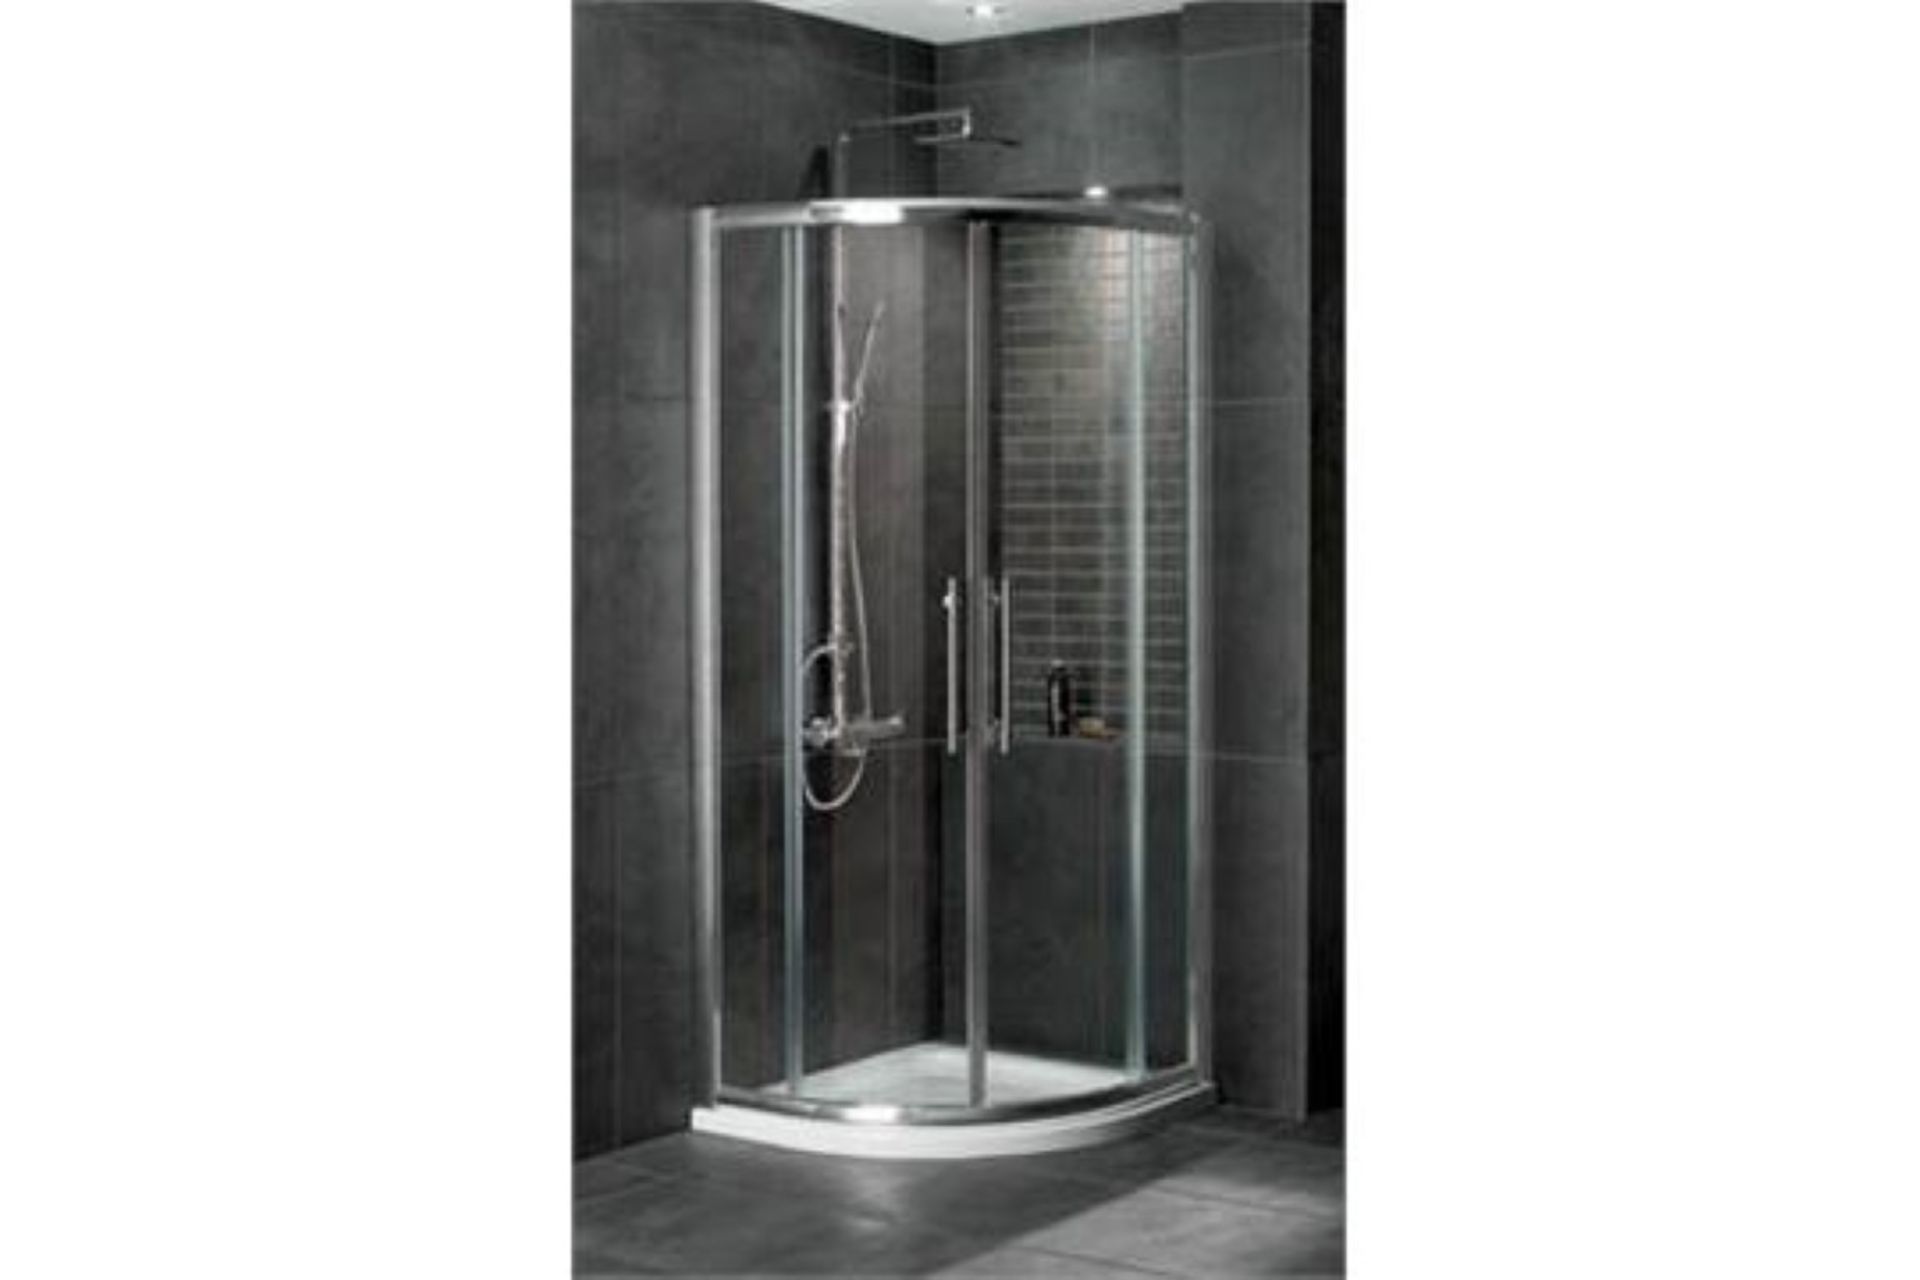 1 x Aqua Latus 800mm Double Door Quad Shower Enclosure With Slimstone Shower Tray - Polished